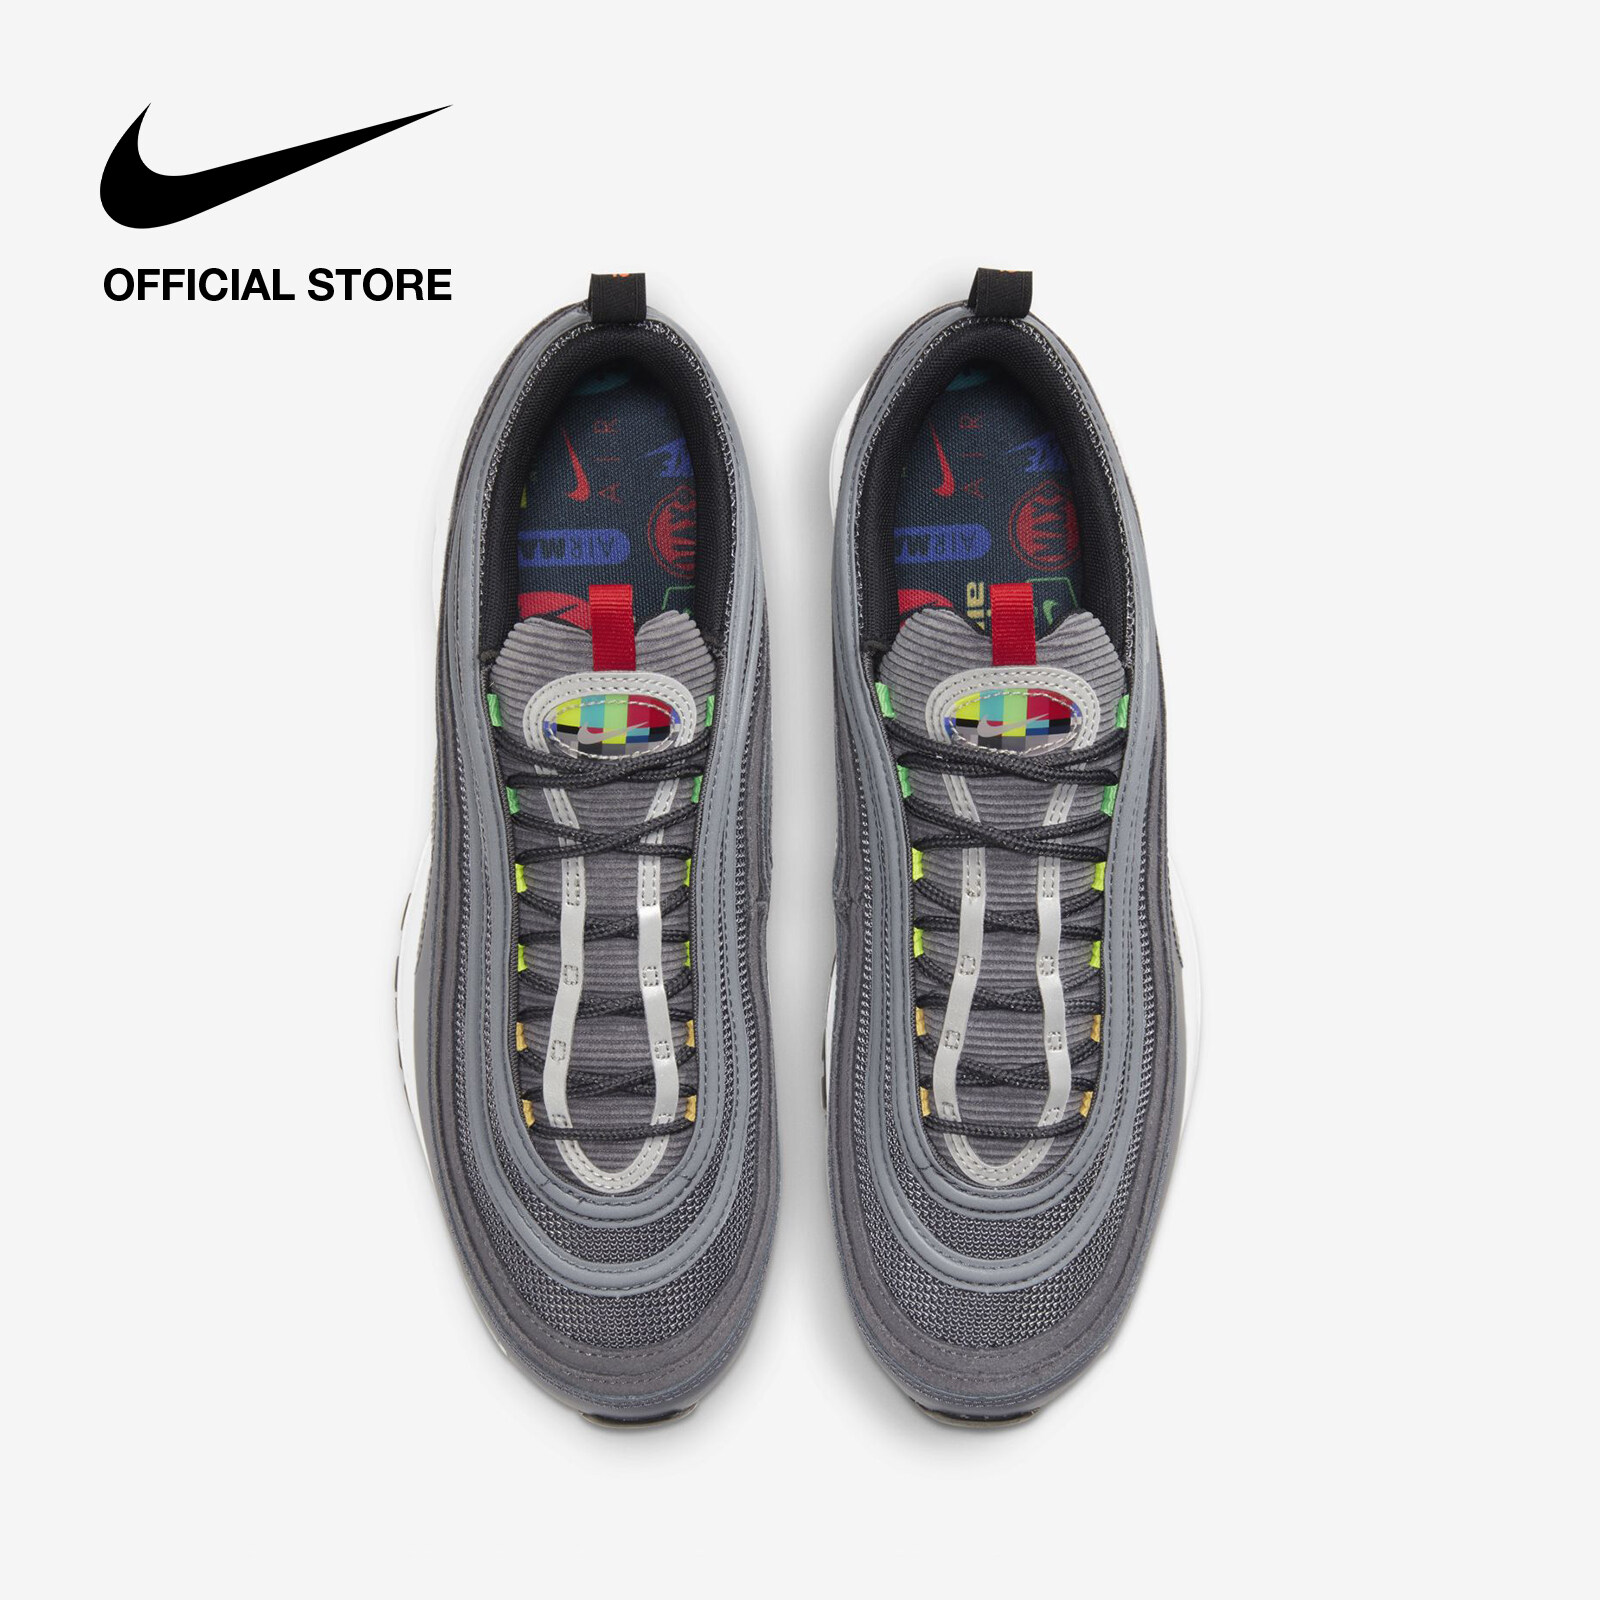 Nike Men's Air Max 97 SE Shoes - Grey รองเท้าผู้ชาย Nike Air Max 97 SE - สีเทา